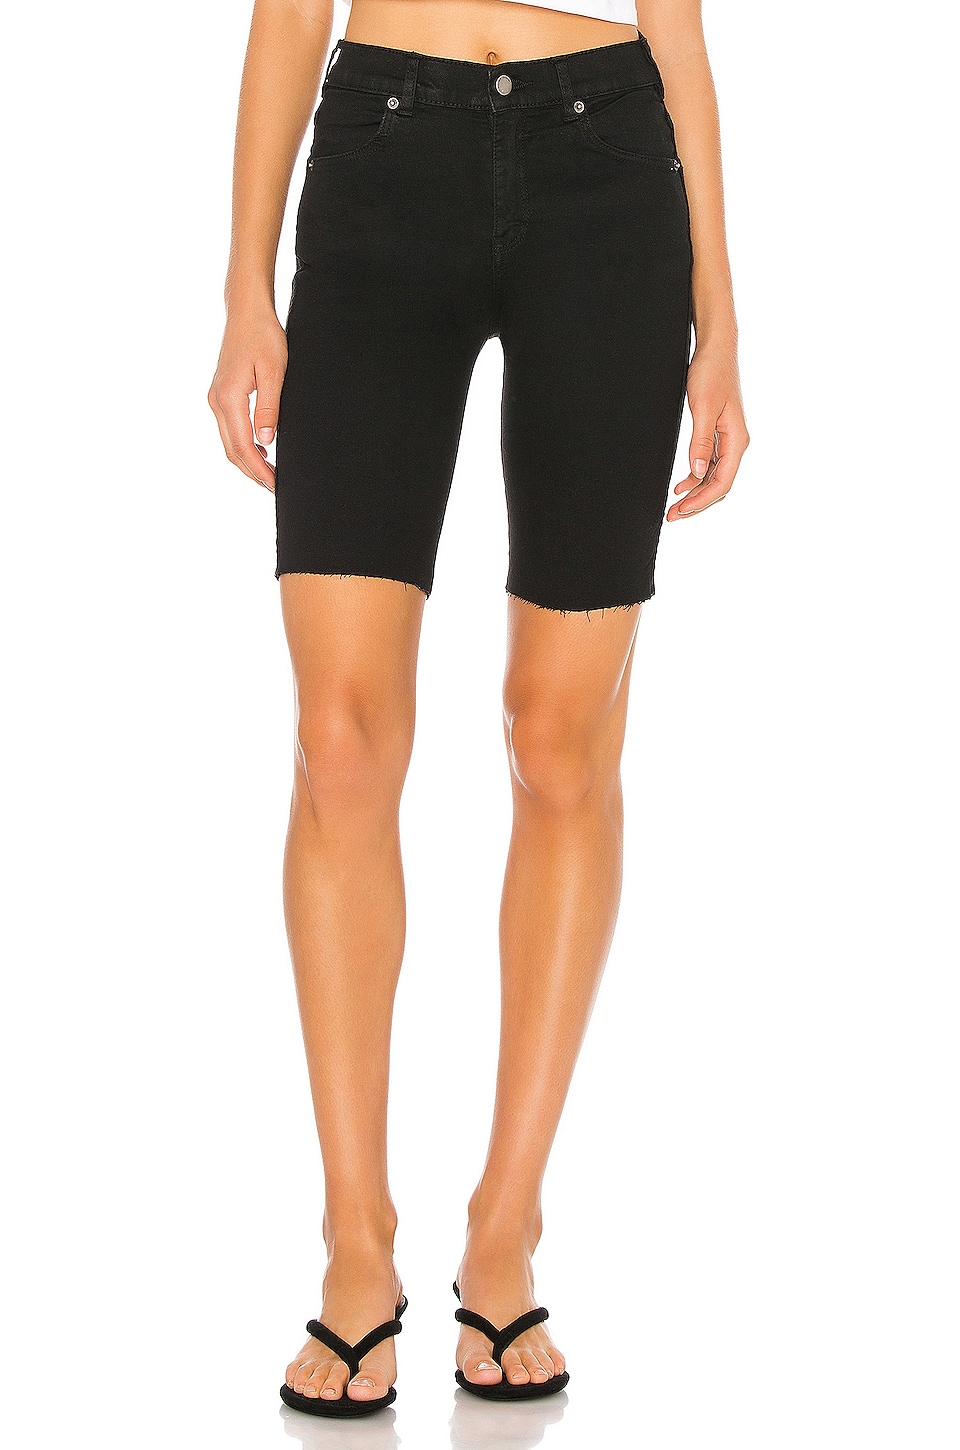 Denim Cotton Black Lexy Bicycle Shorts Womens Clothing Shorts Knee-length shorts and long shorts Dr 